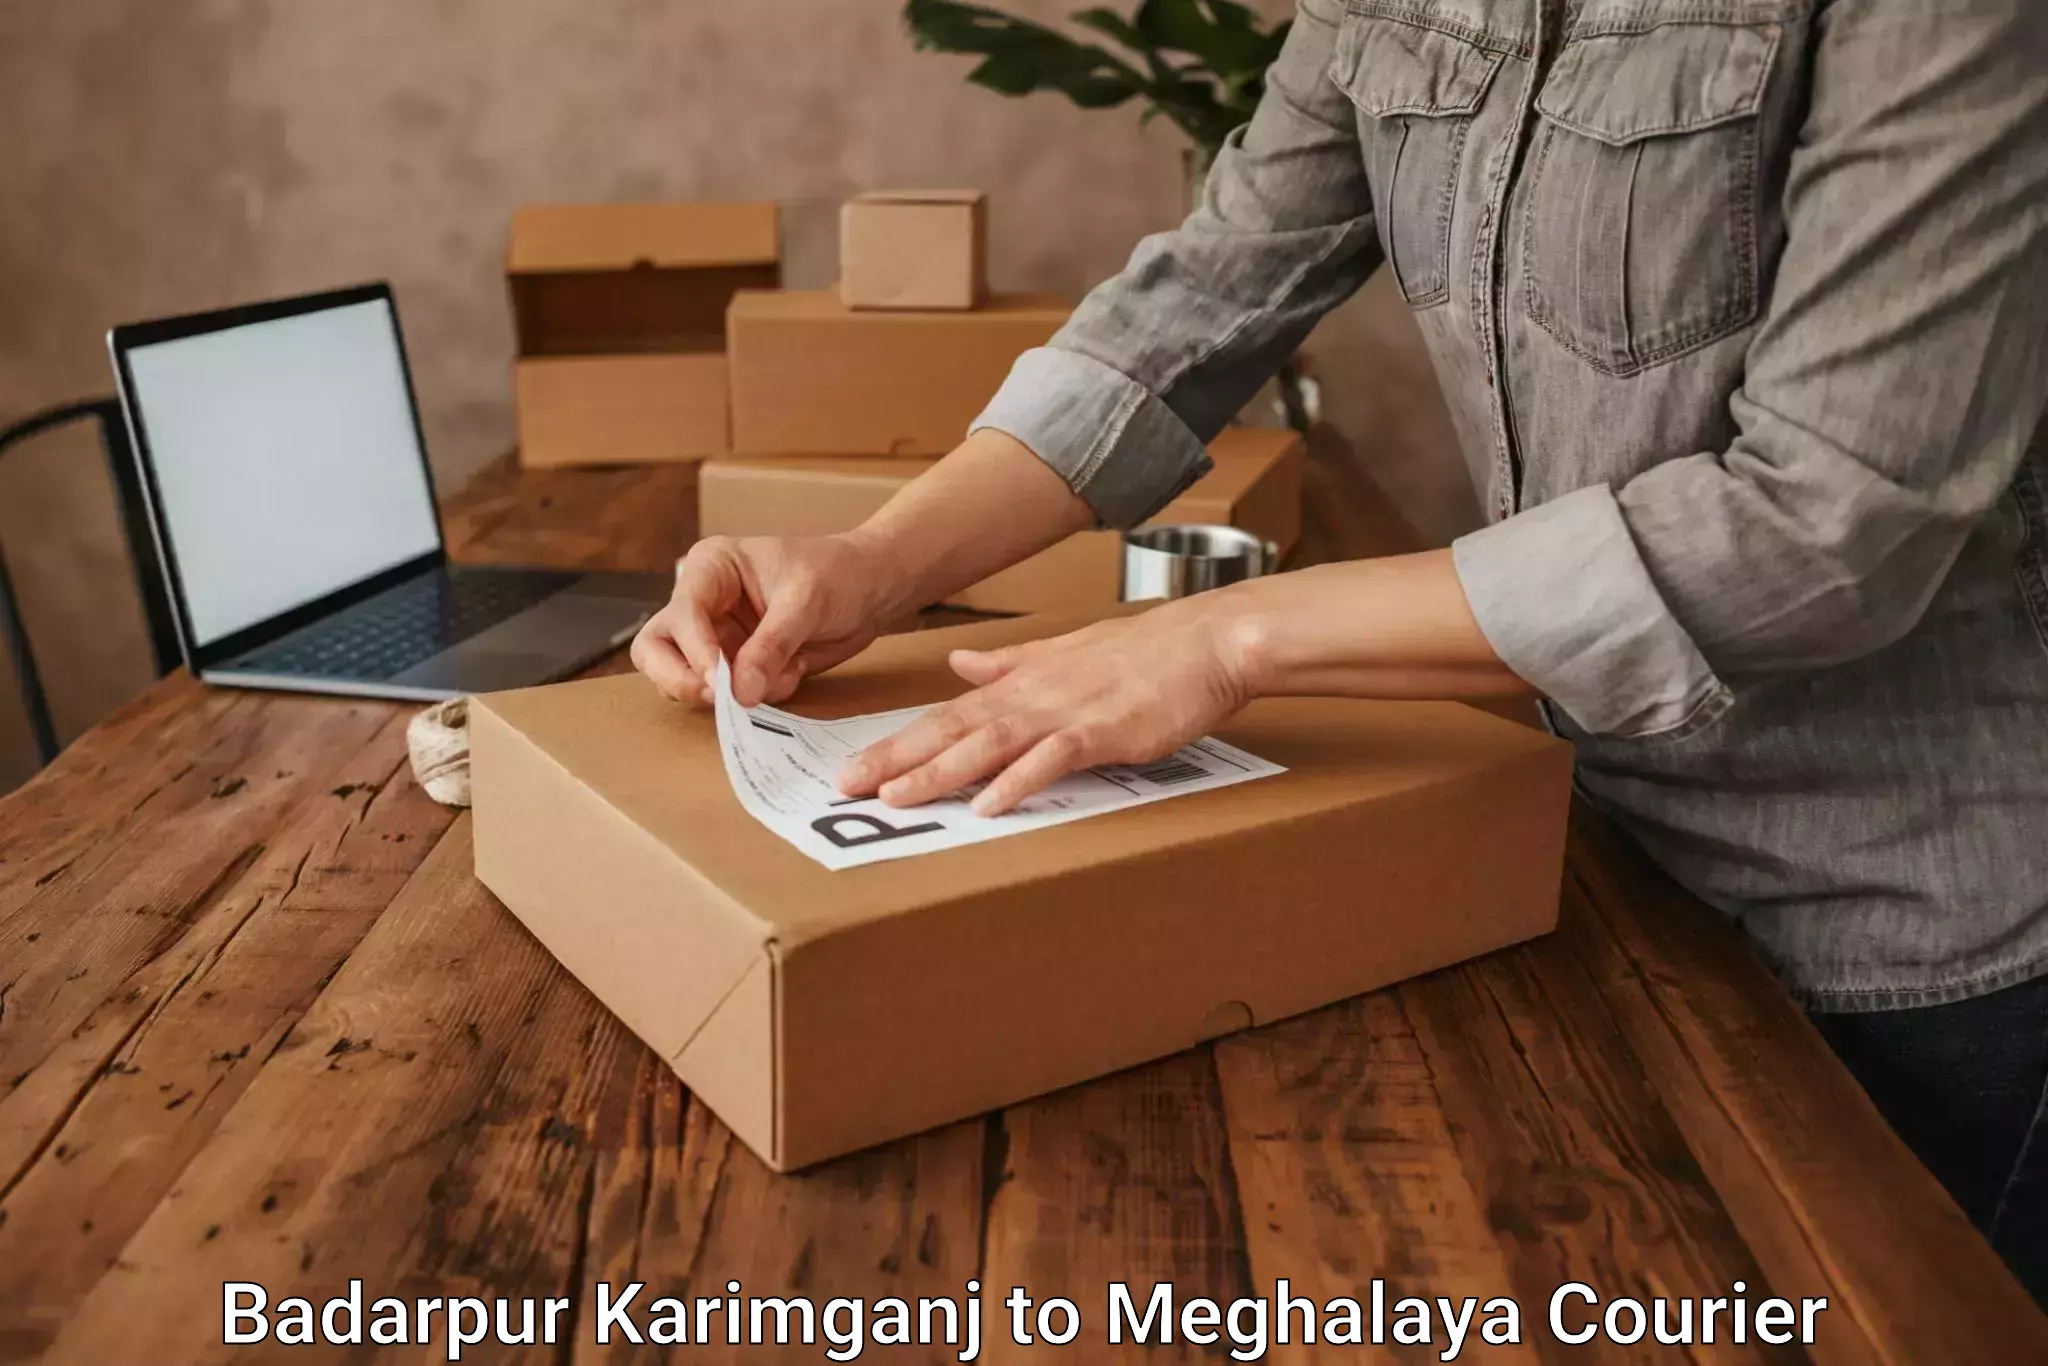 Reliable delivery network Badarpur Karimganj to Ri Bhoi